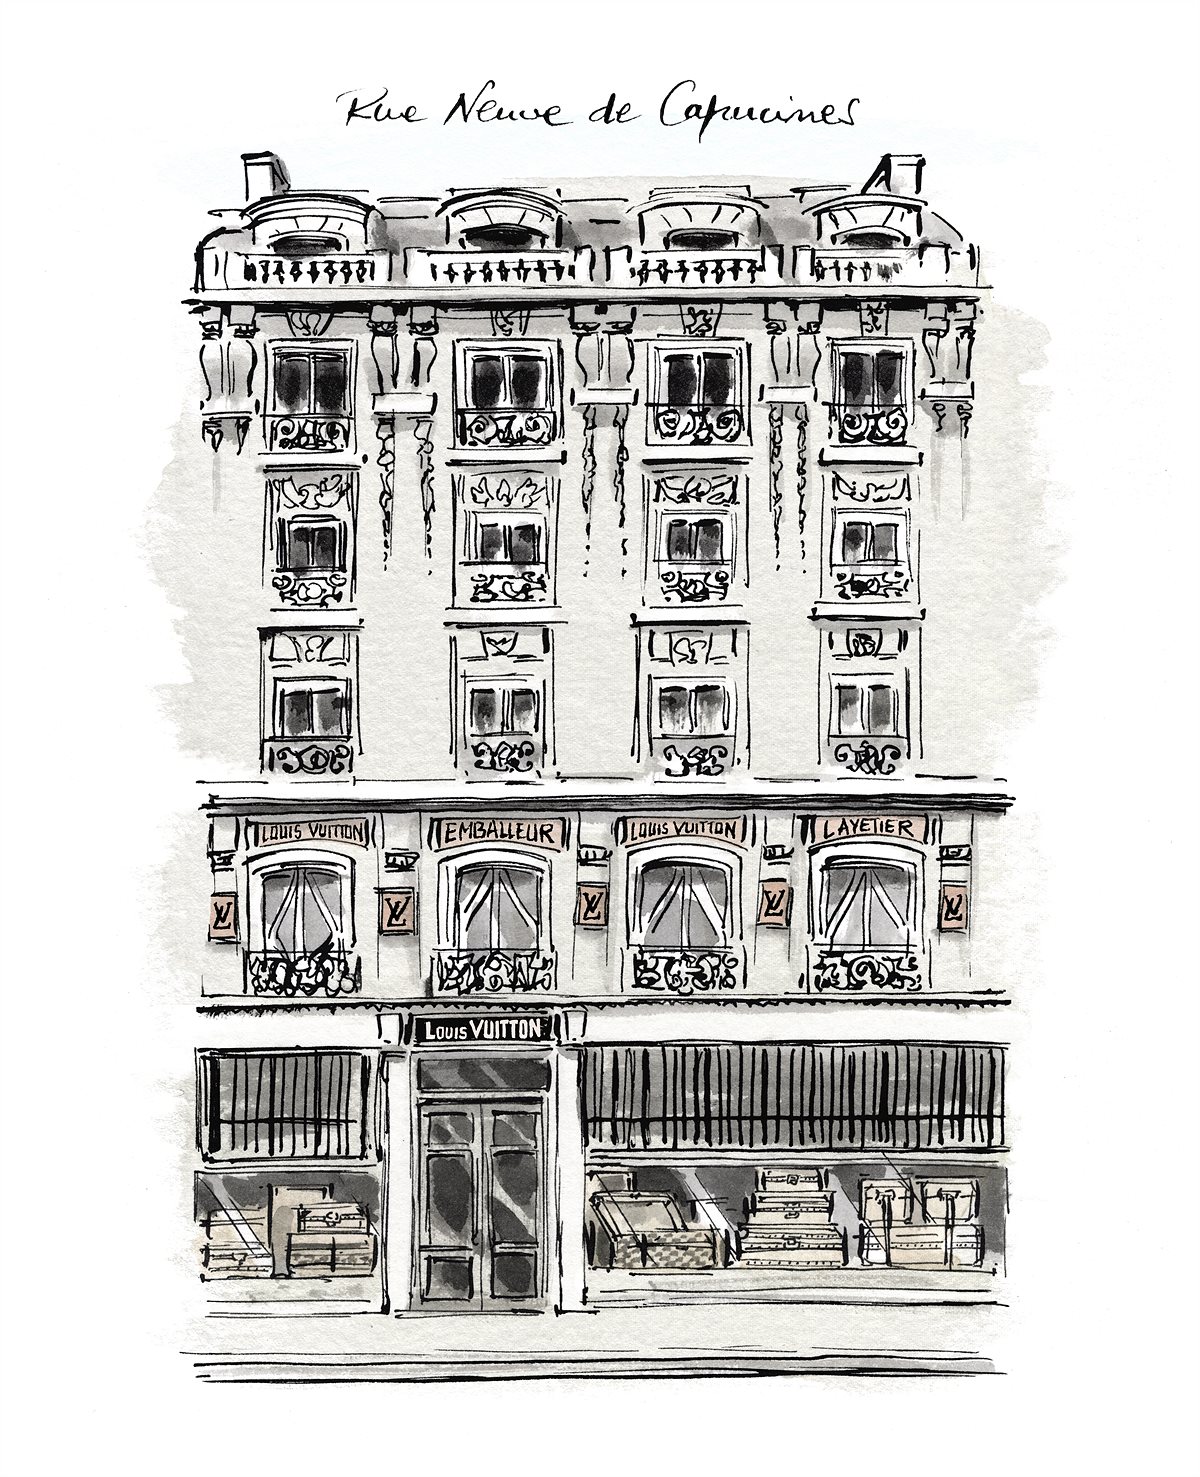 4 Rue Neuve-de-Capucines, where Louis Vuitton founded his own Maison in 1854.